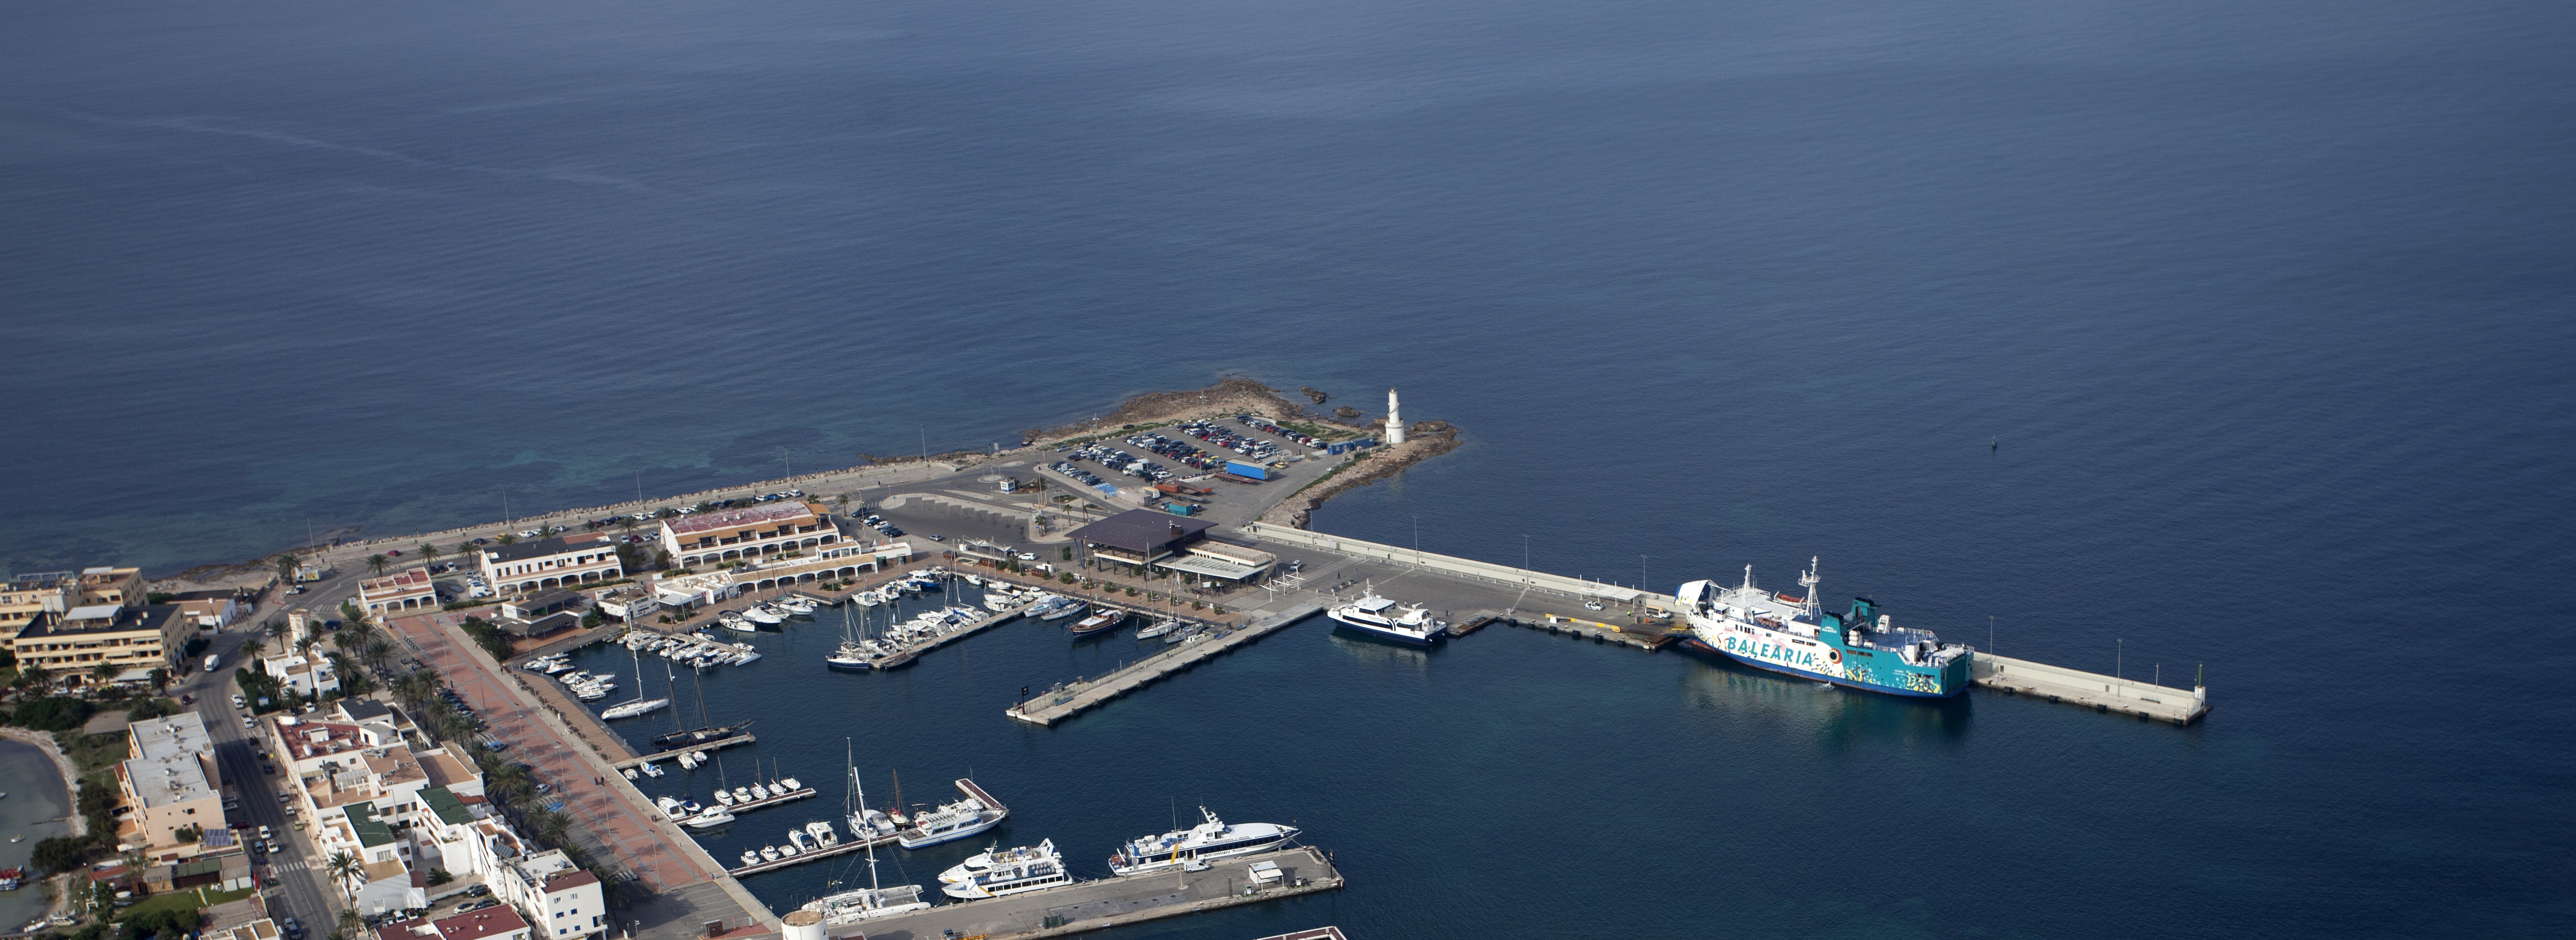 Adaptation works get underway on the passenger dock at the Port of La Savina 